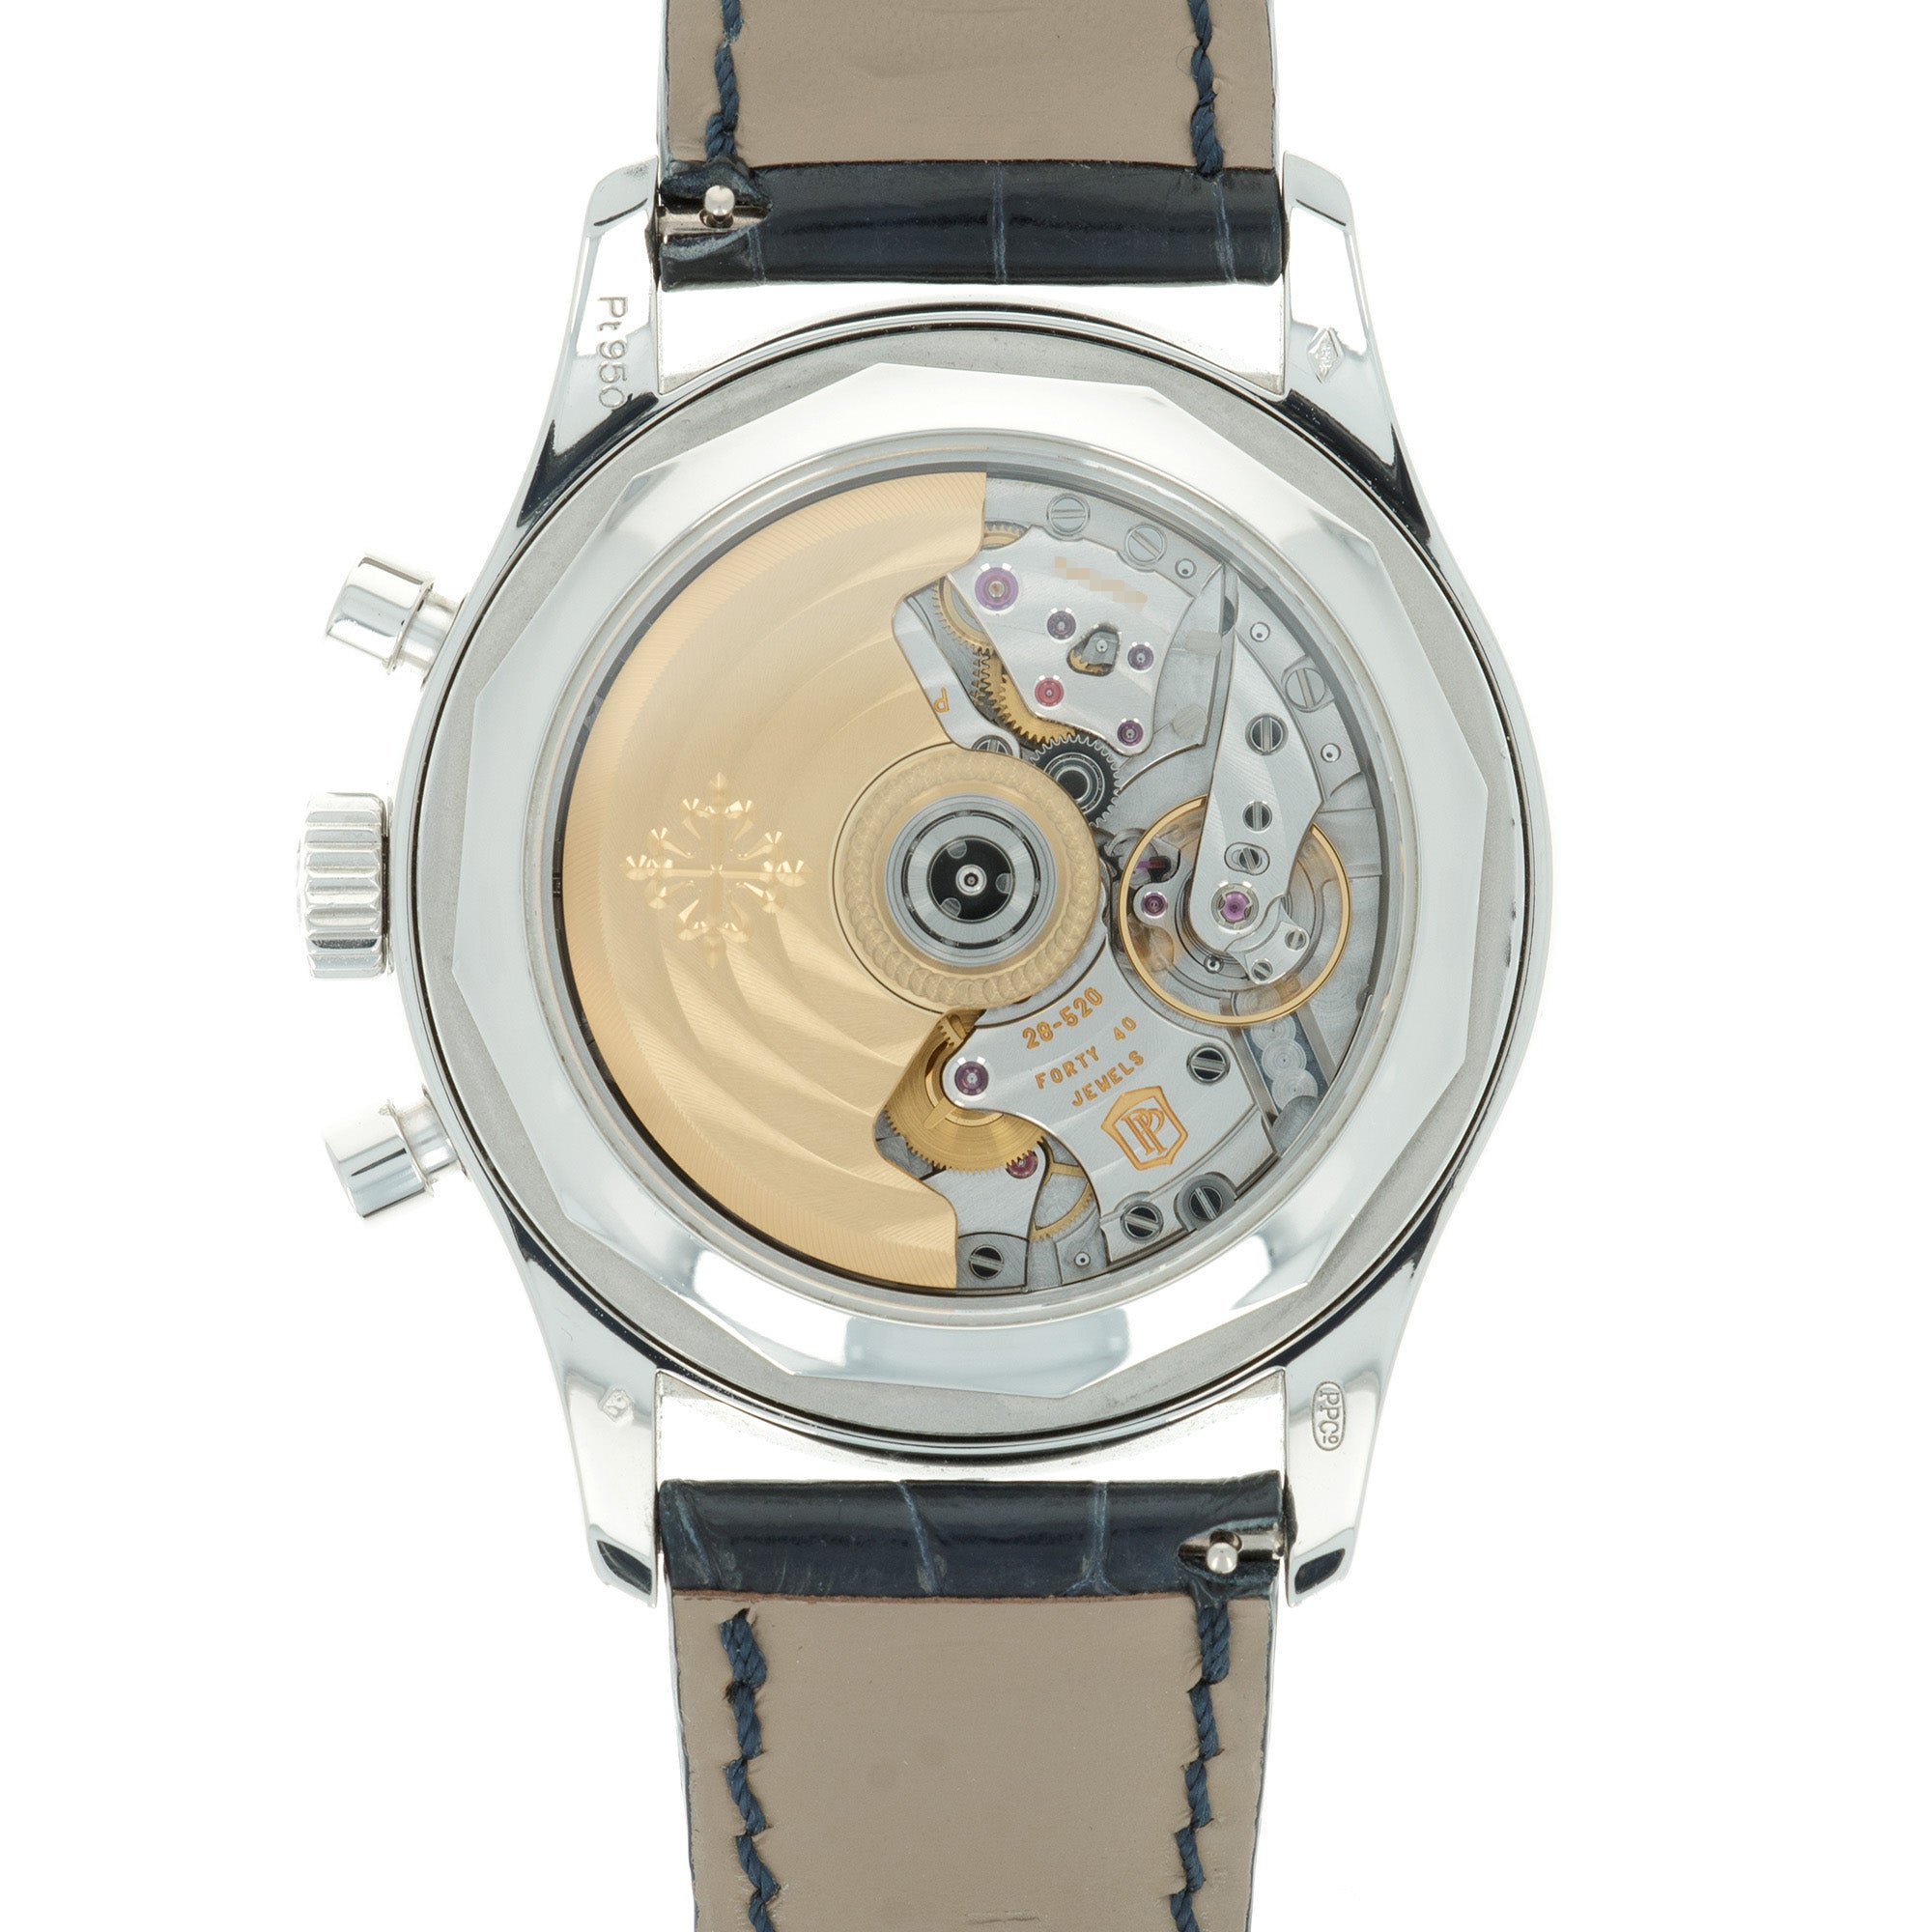 Patek Philippe - Patek Philippe Platinum Annual Calendar Chronograph Ref. 5961P - The Keystone Watches